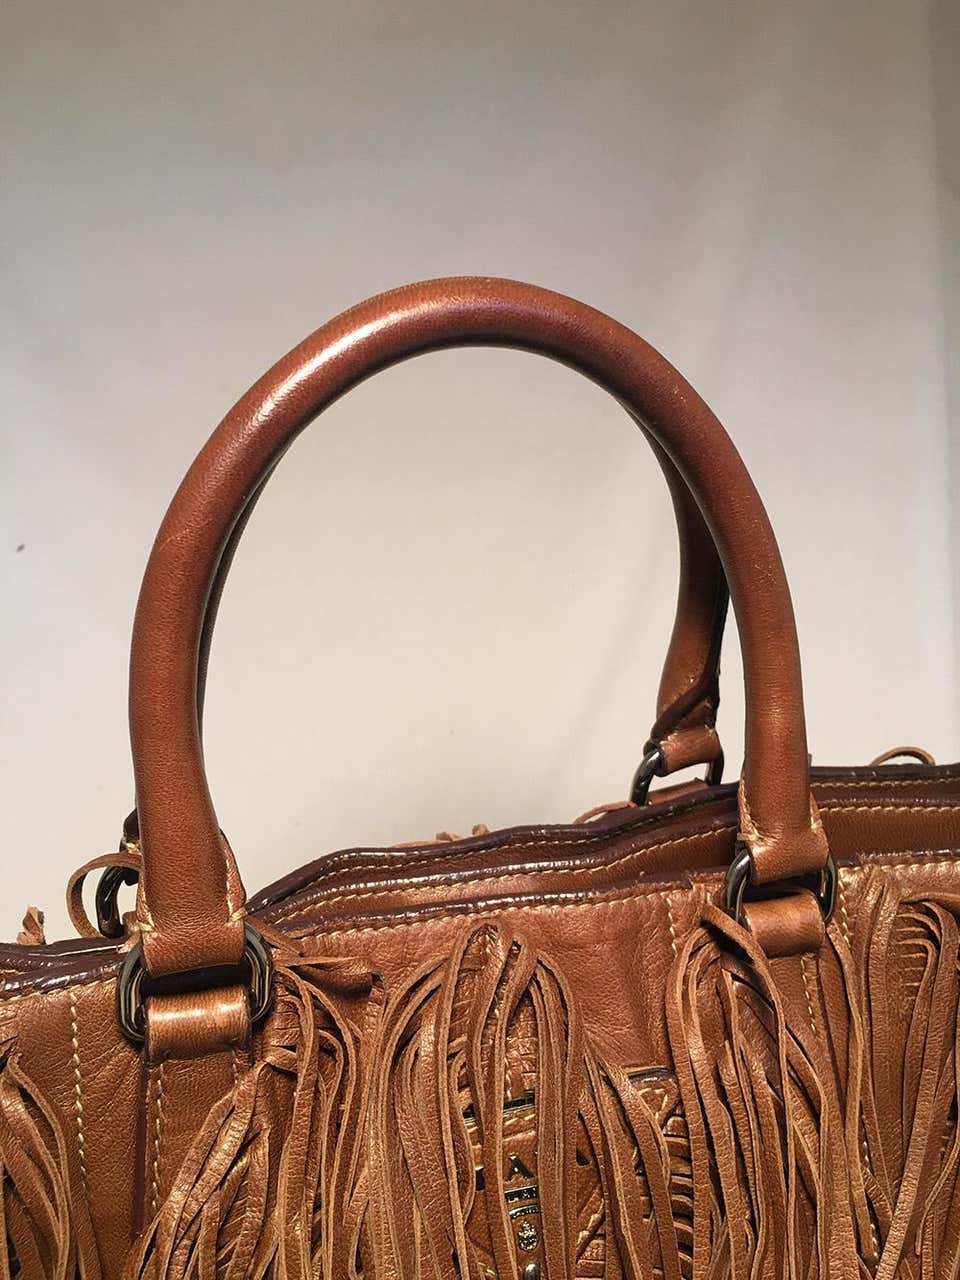 PRADA Noce Nappa Brown Leather Fringe Tote Bag – Dignity Jewels Inc.